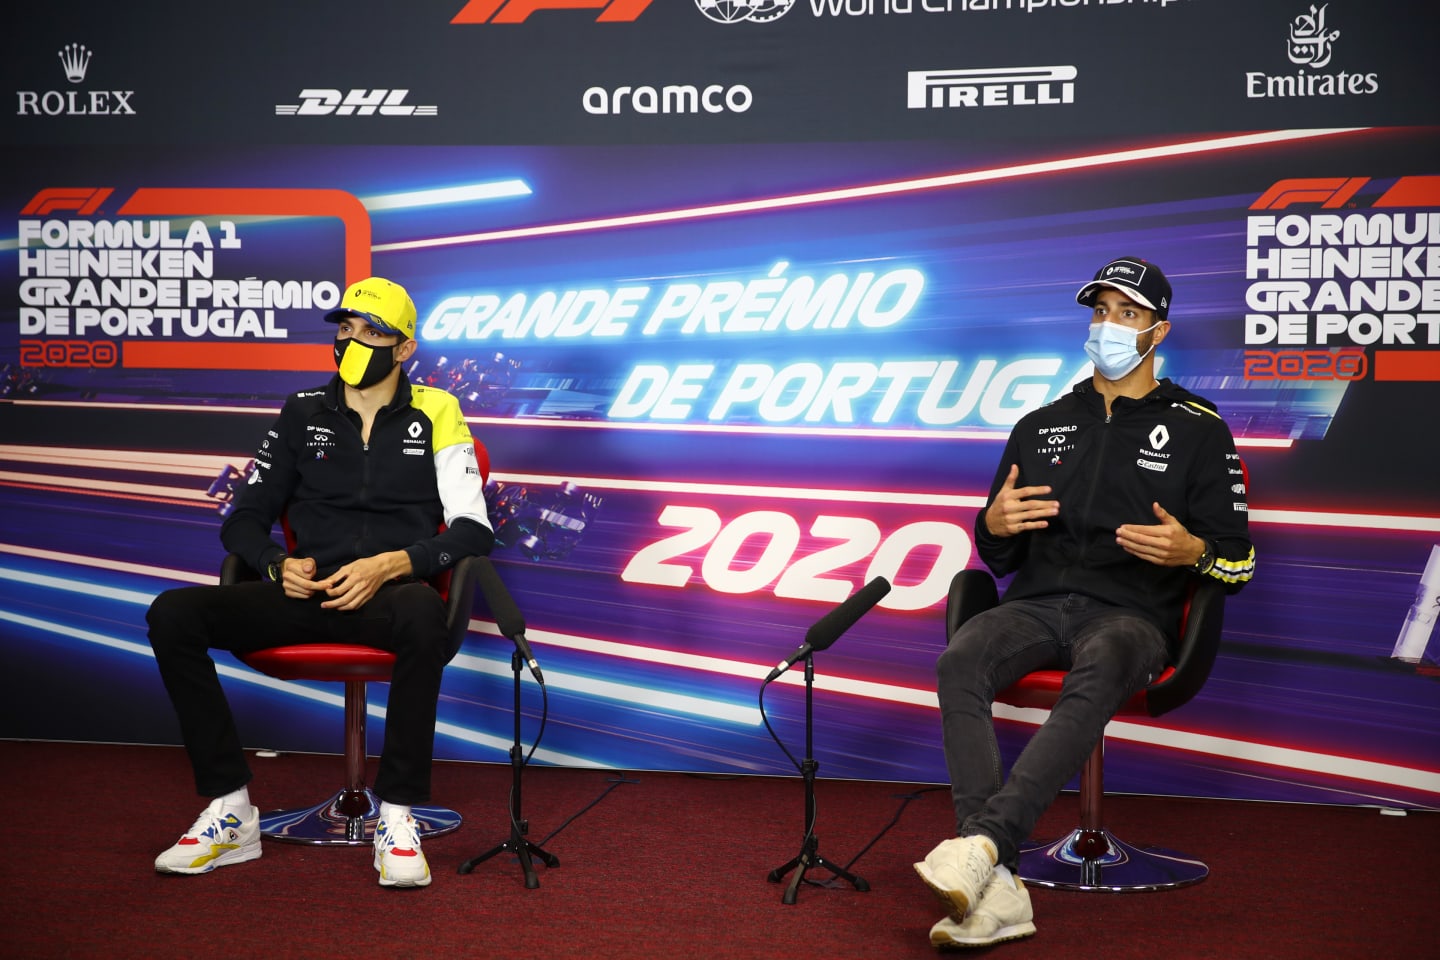 PORTIMAO, PORTUGAL - OCTOBER 22: Esteban Ocon of France and Renault Sport F1 and Daniel Ricciardo